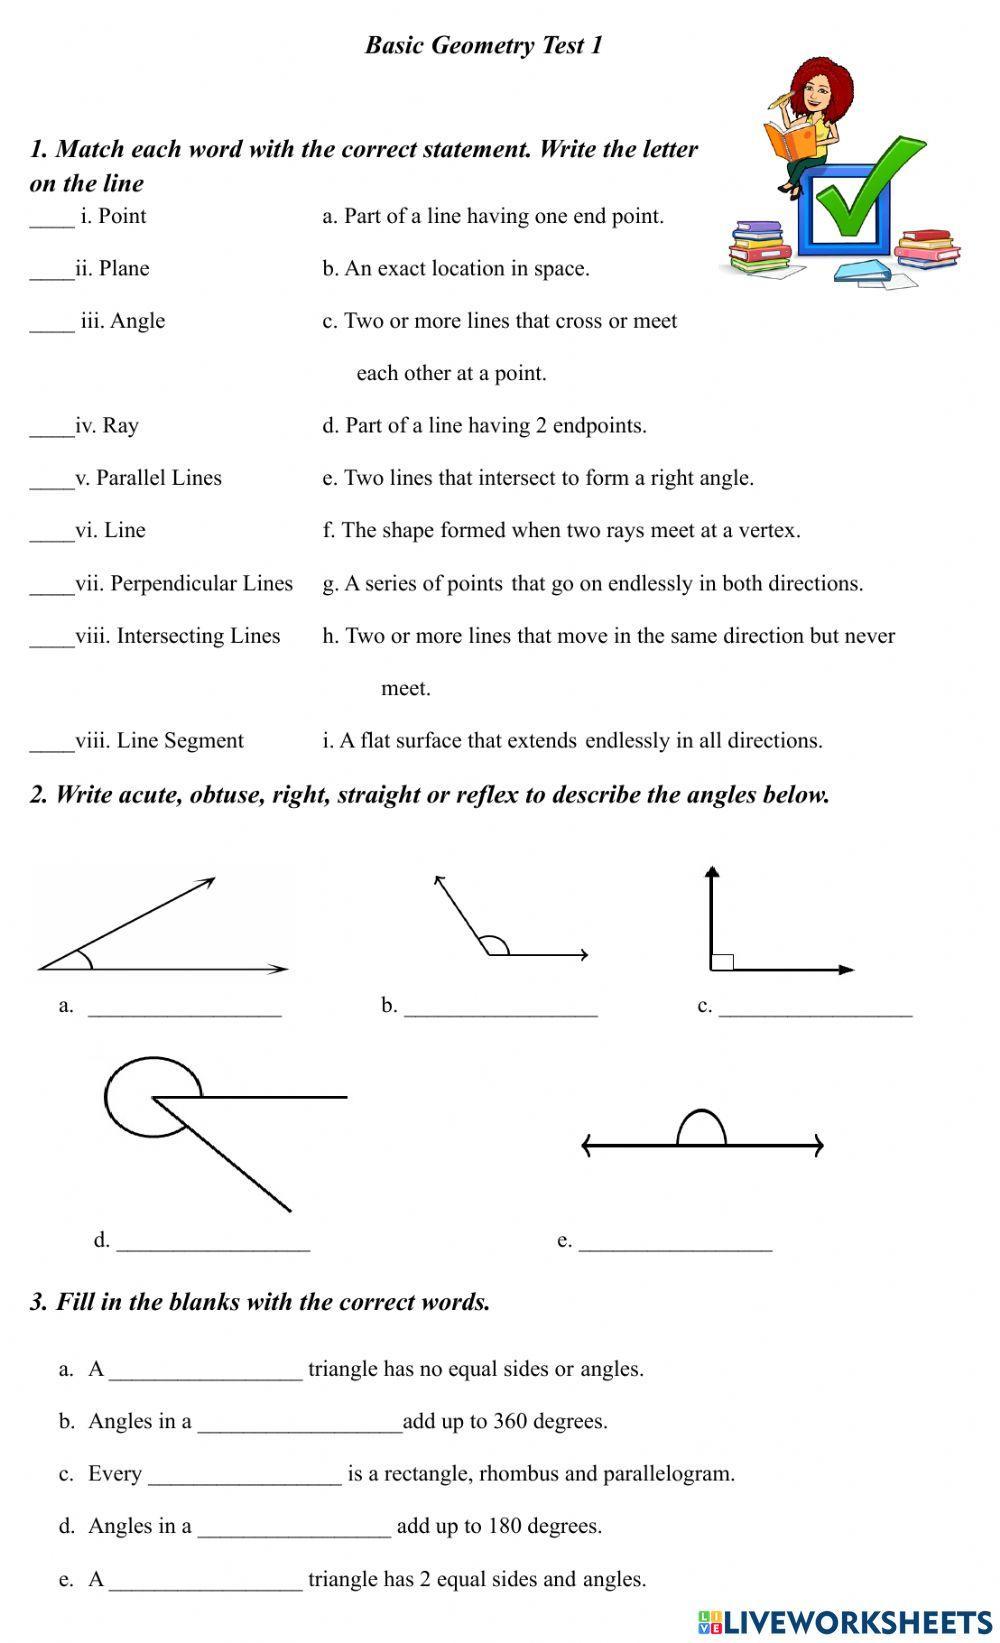 Basic Geometric Terms